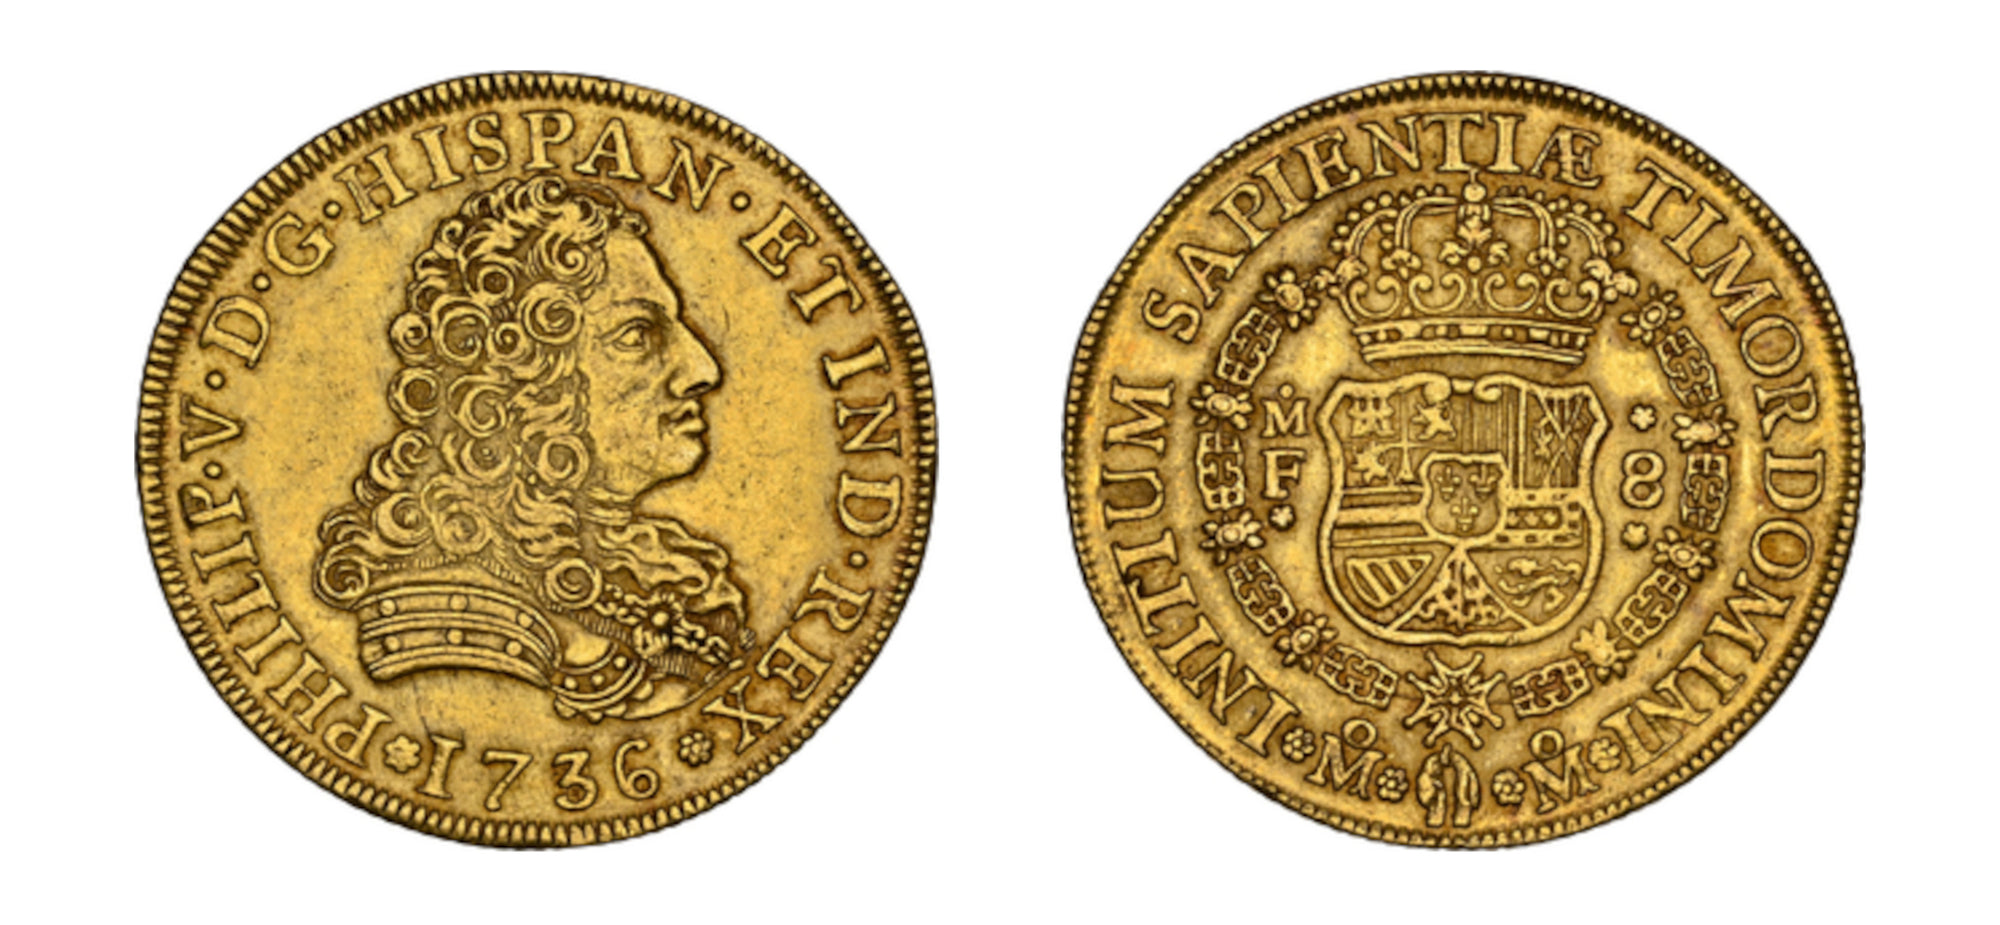 1736 Gold 8 Escudos NGC AU55 - Hard Asset Management, Inc